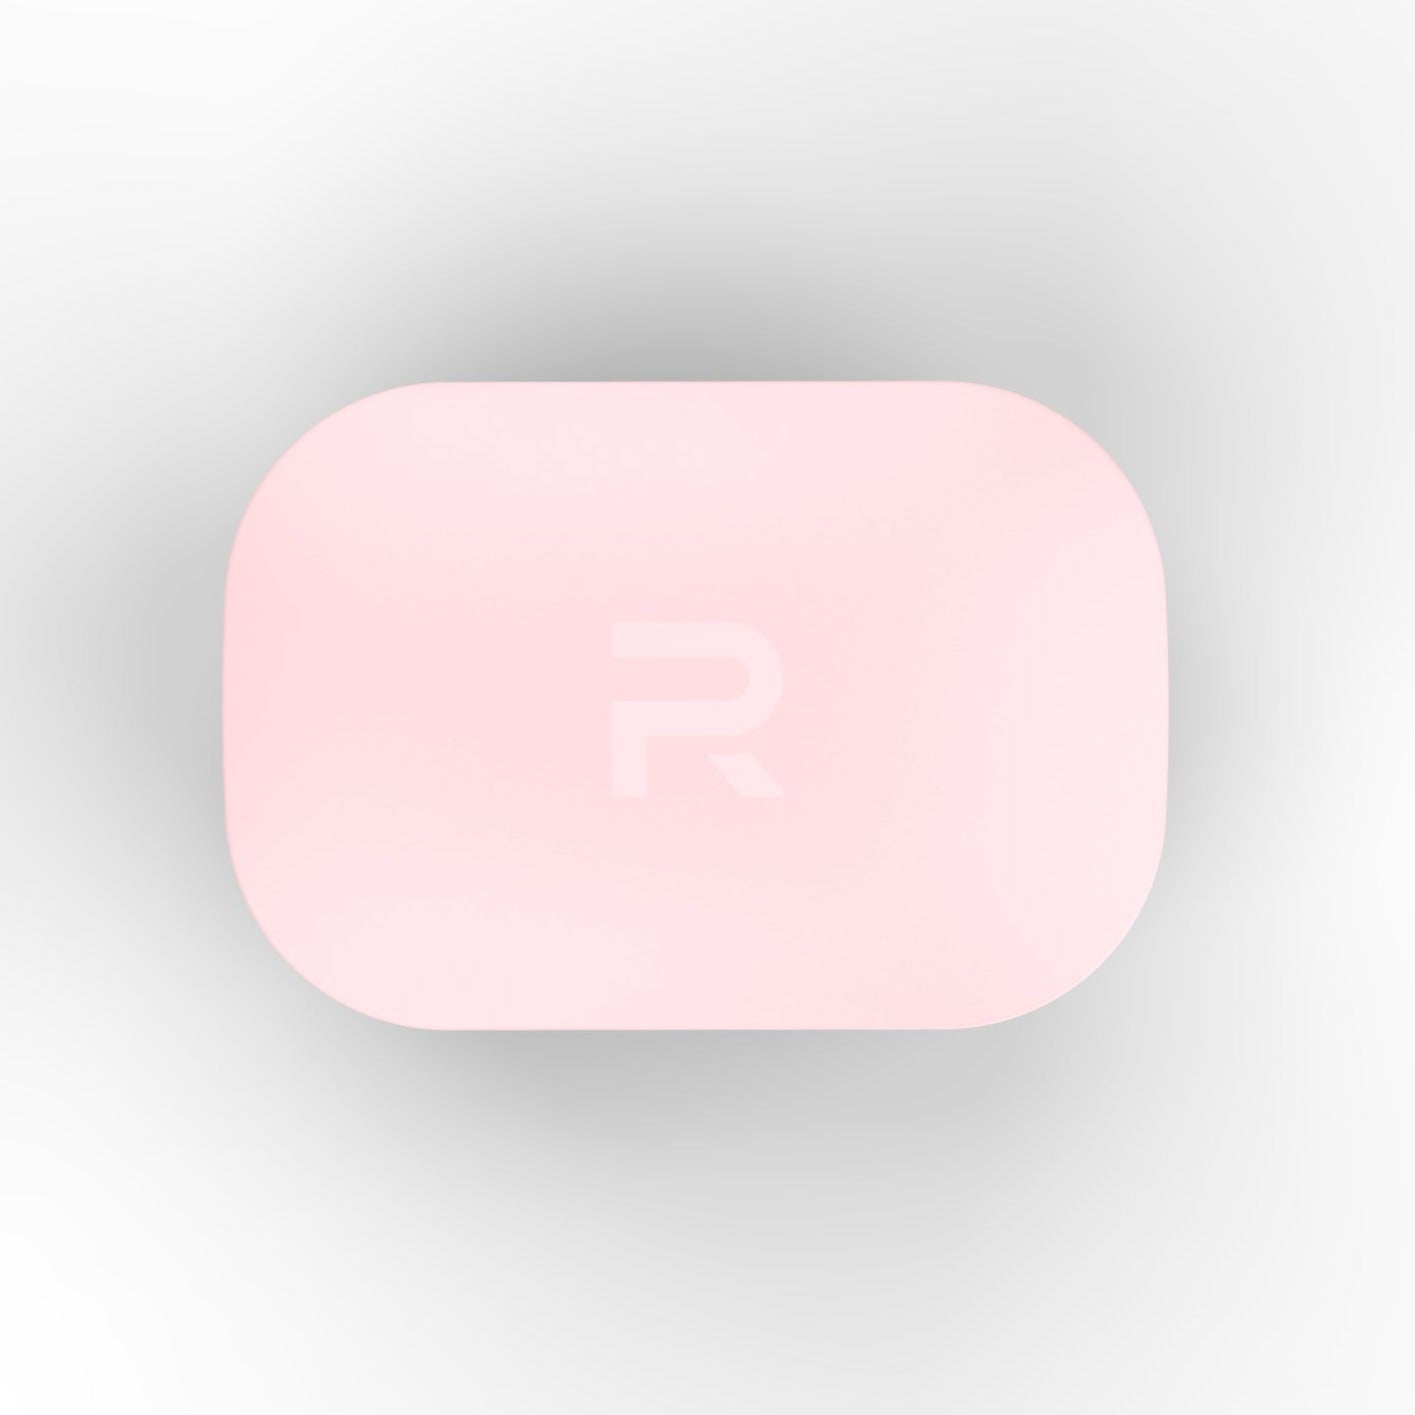 RunPods Air headphones charging case in pink